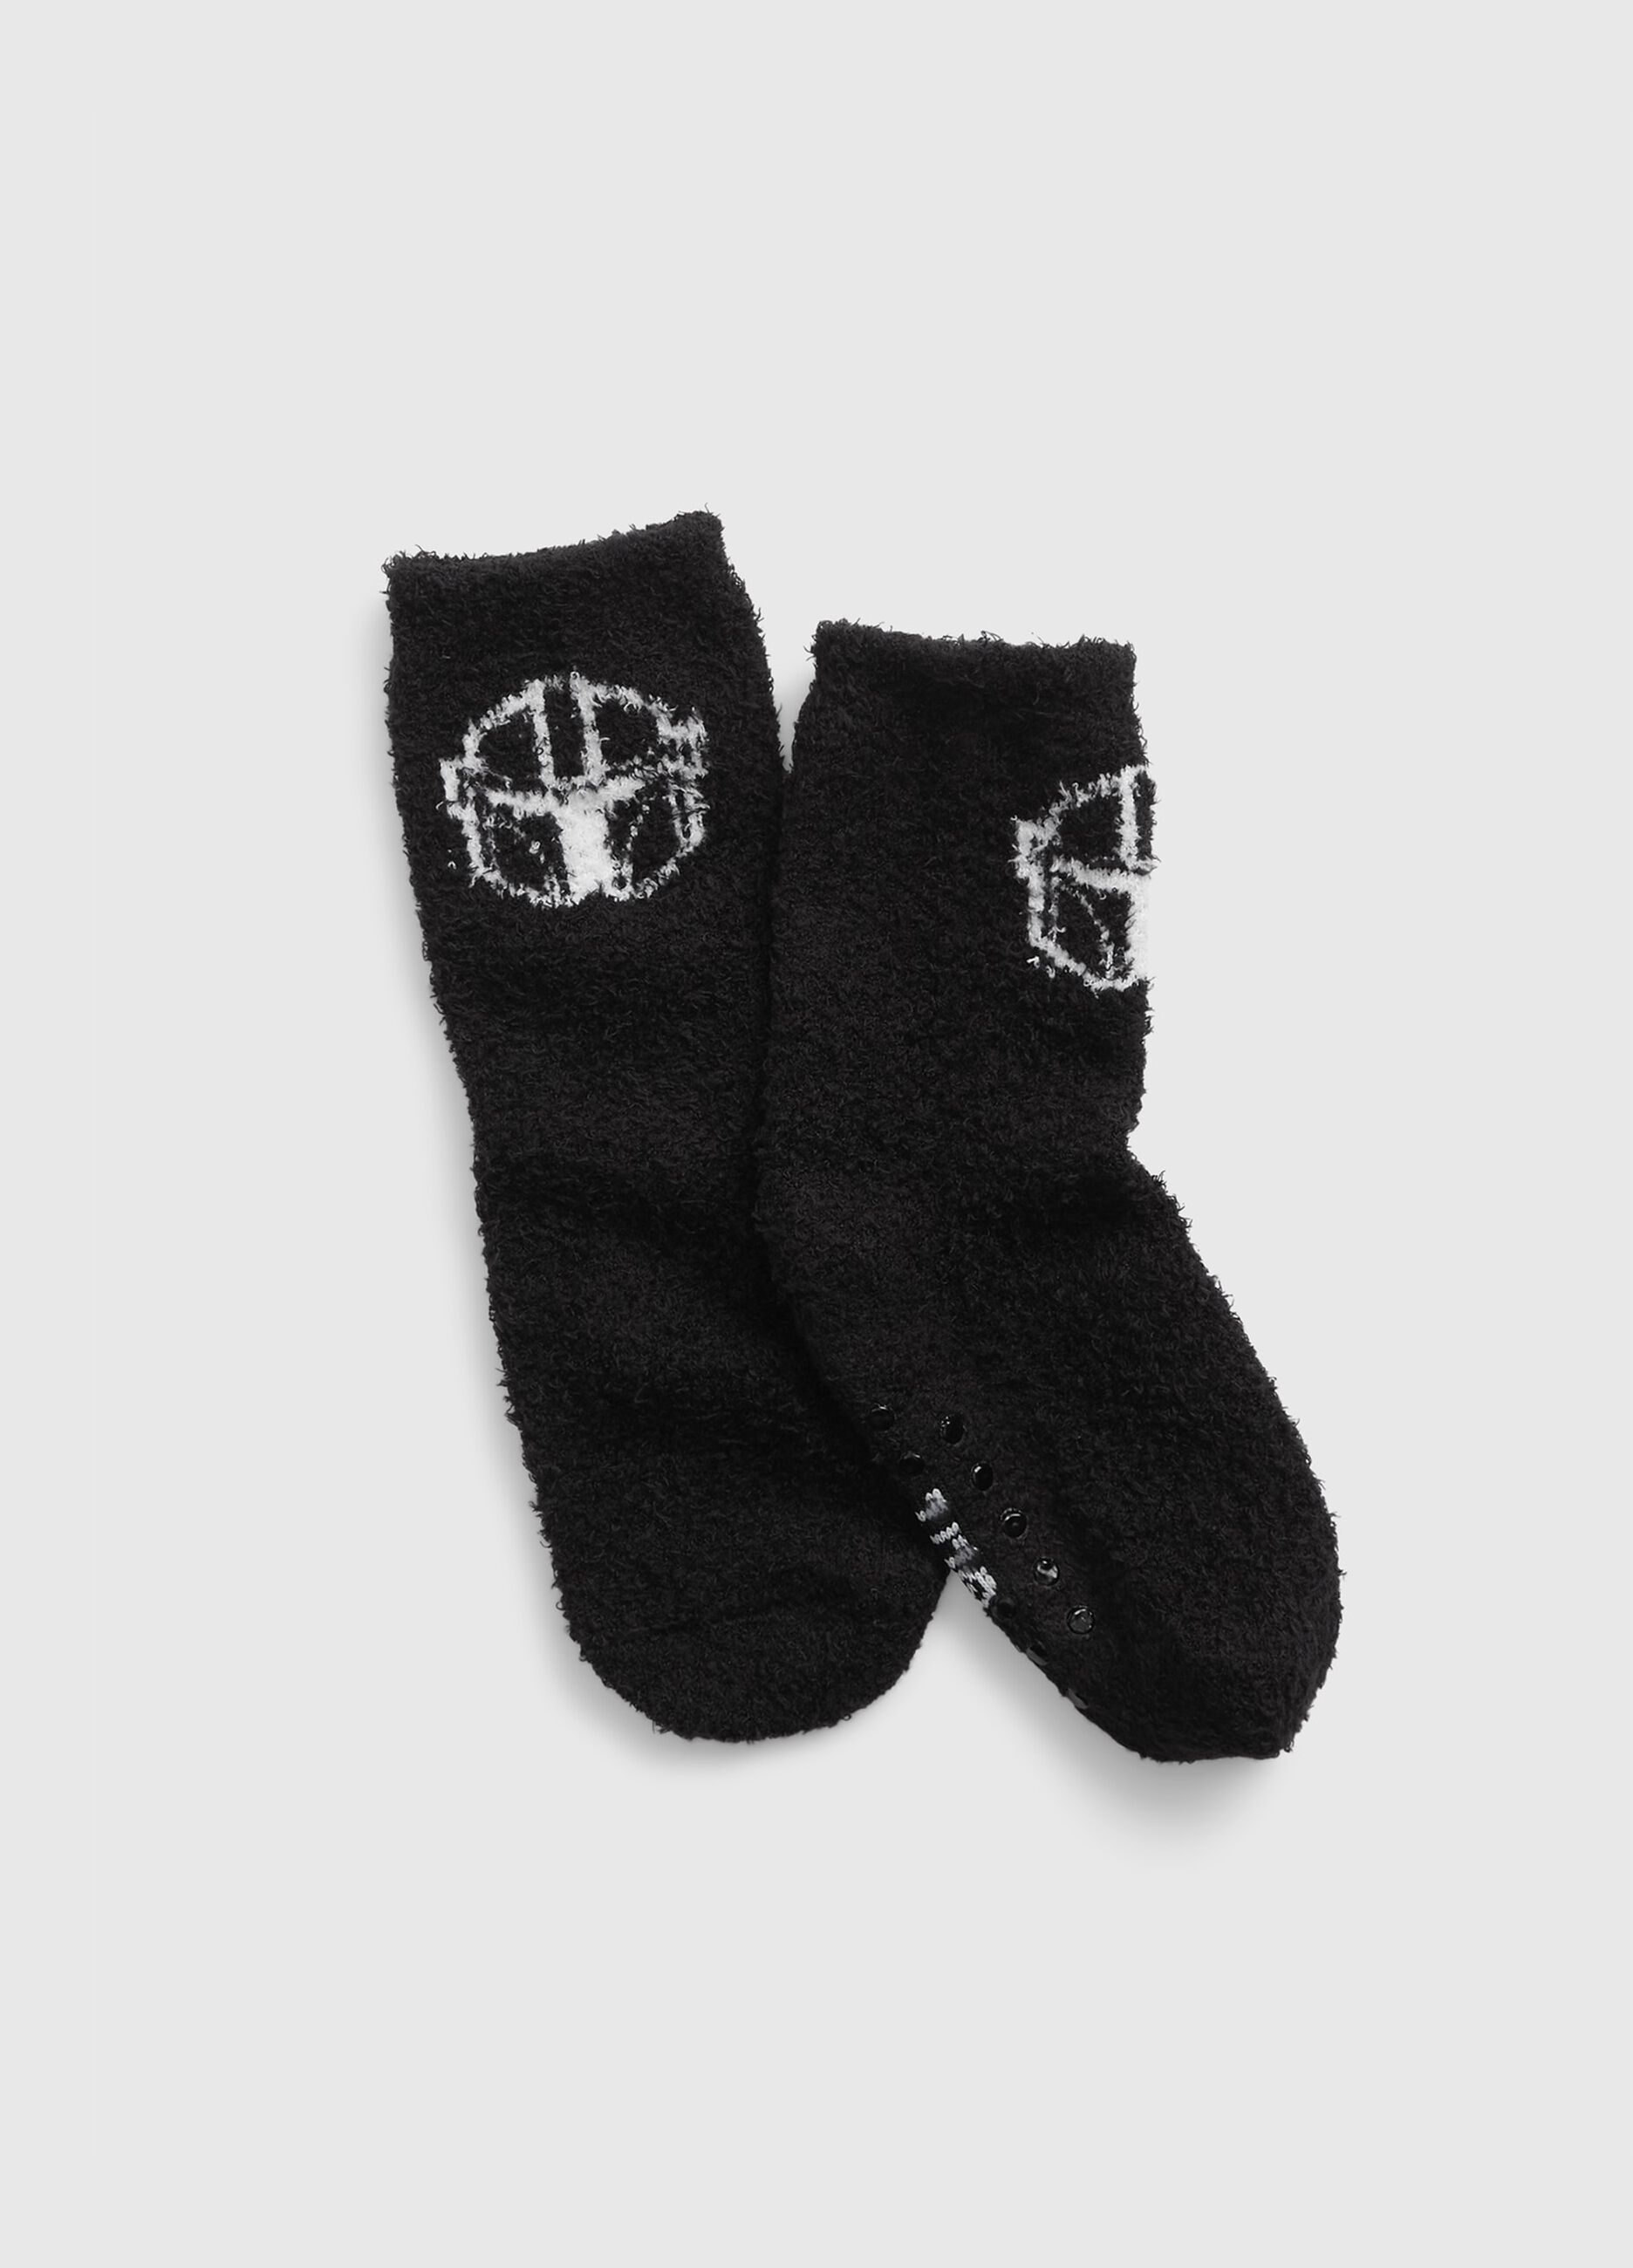 Slipper socks with Star Wars design